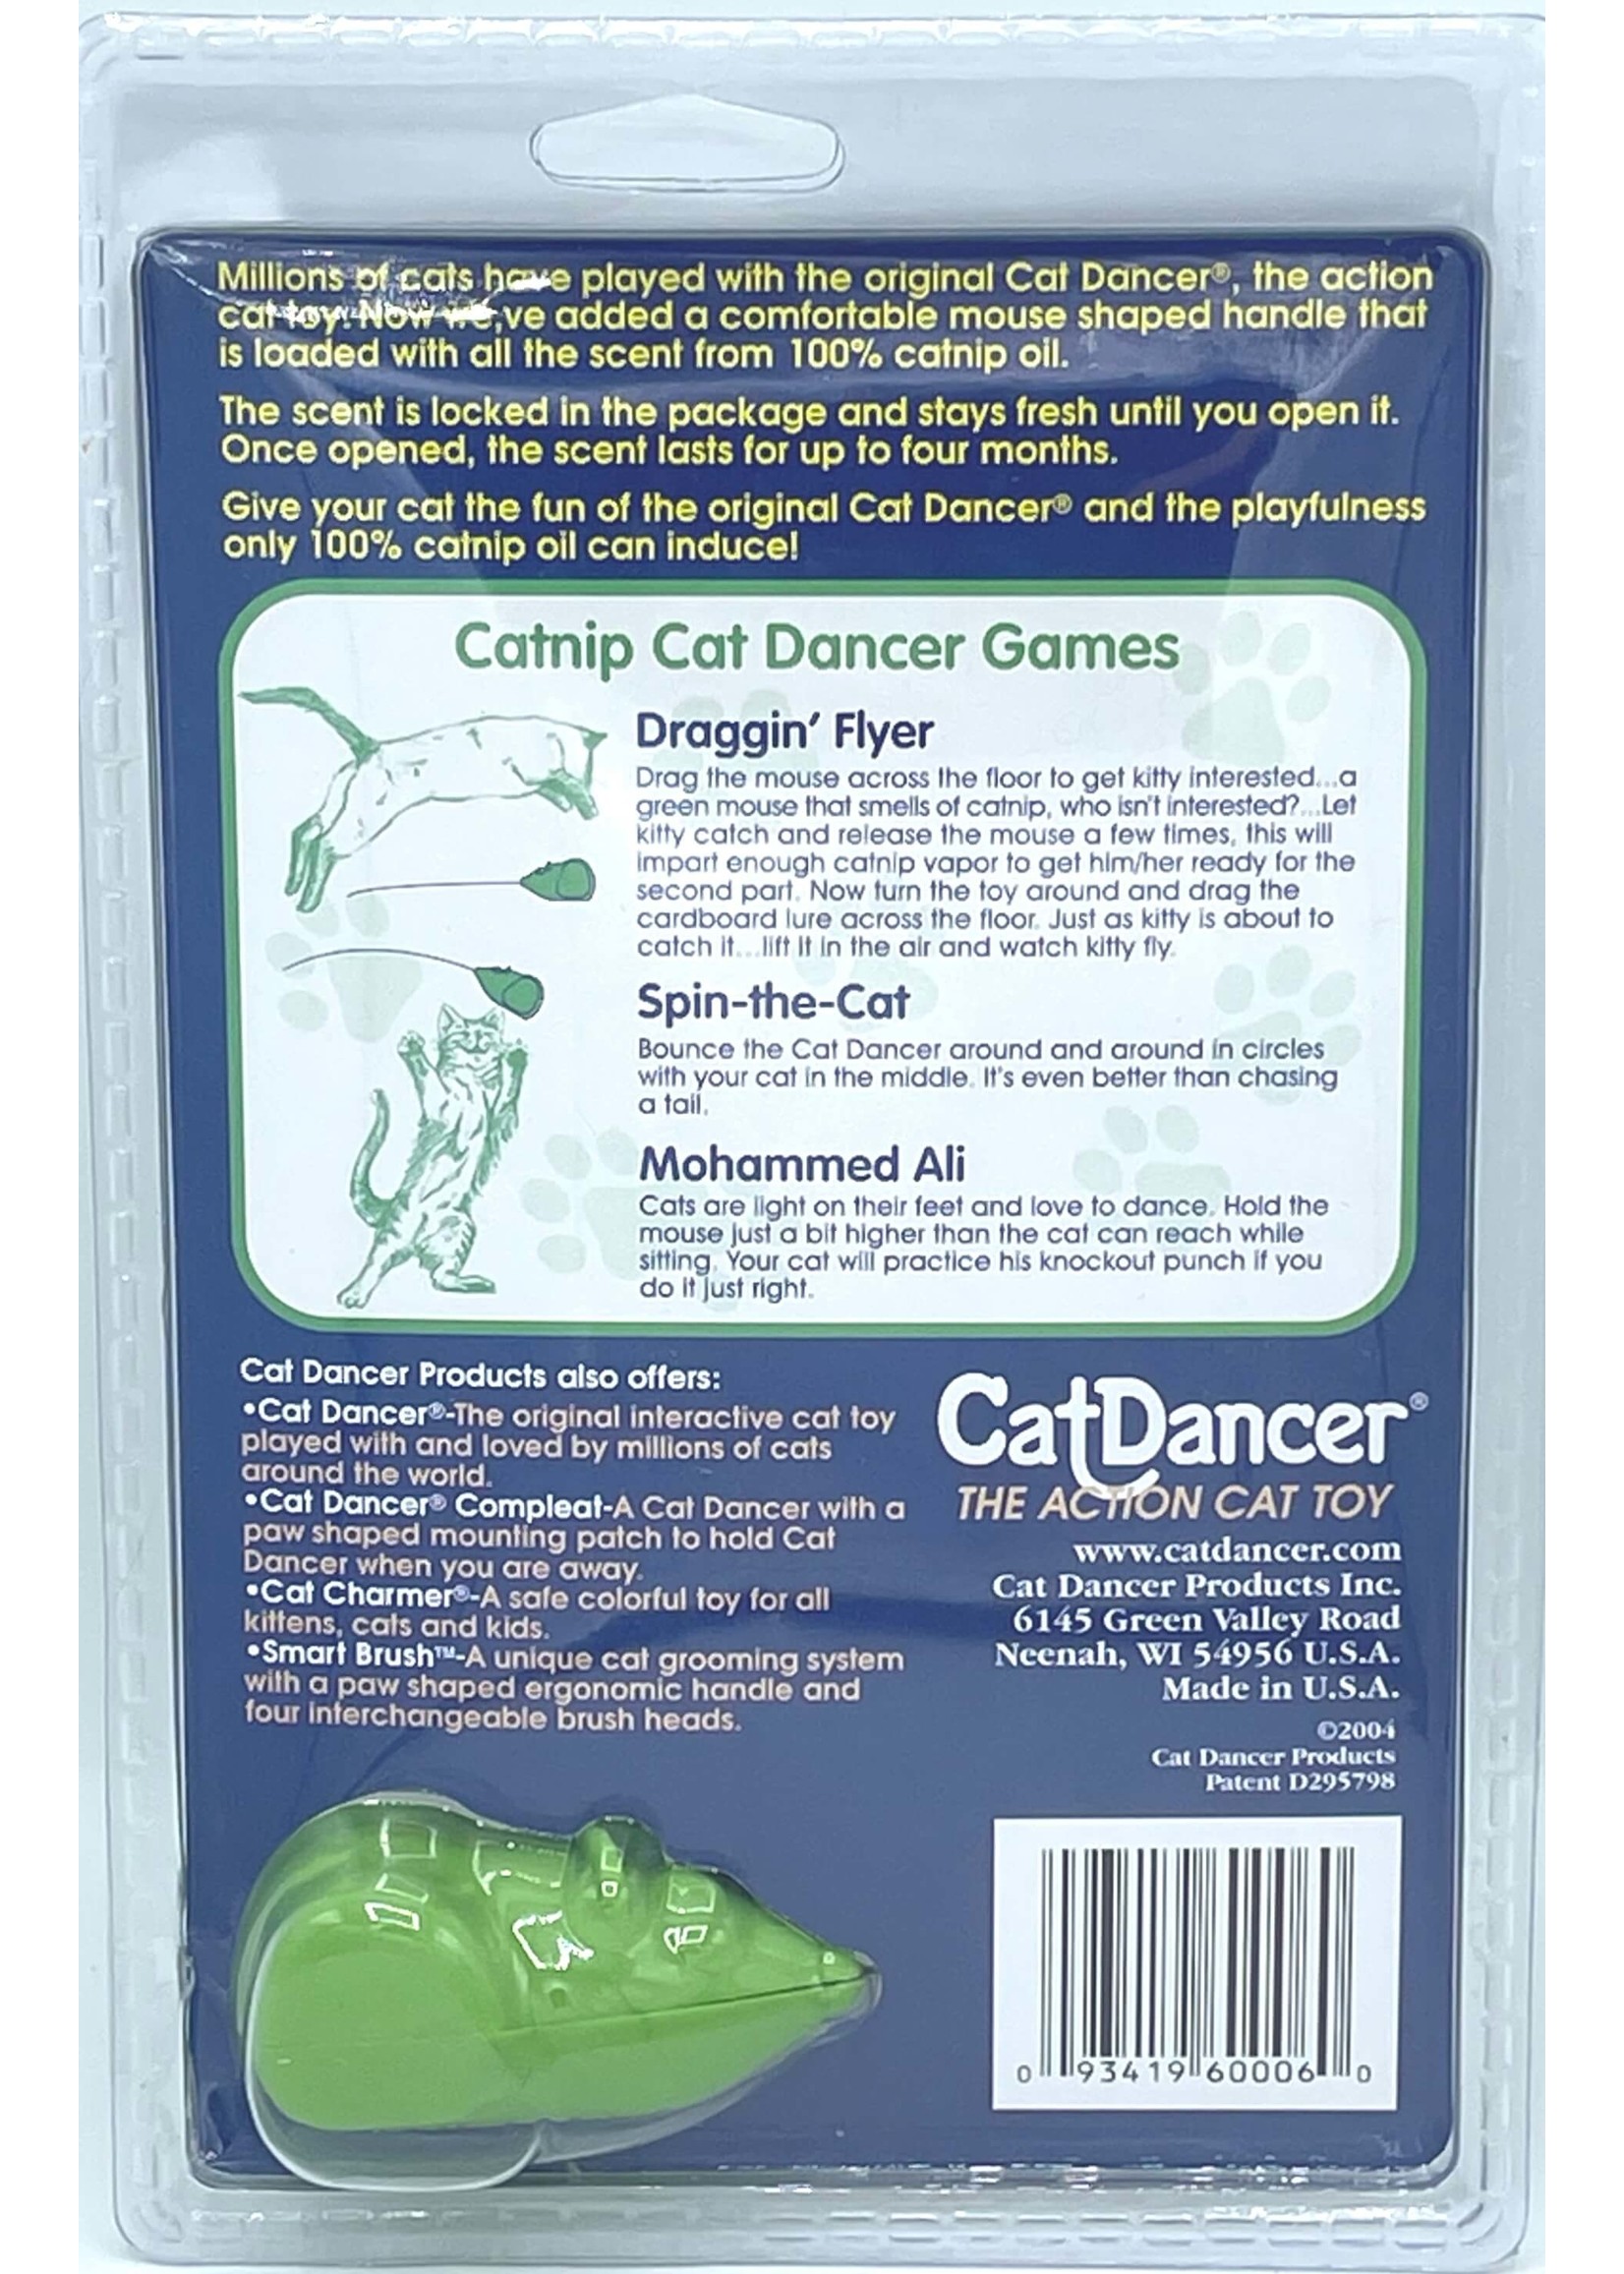 CatDancer Catnip Cat Dancer Interactive Cat Toy